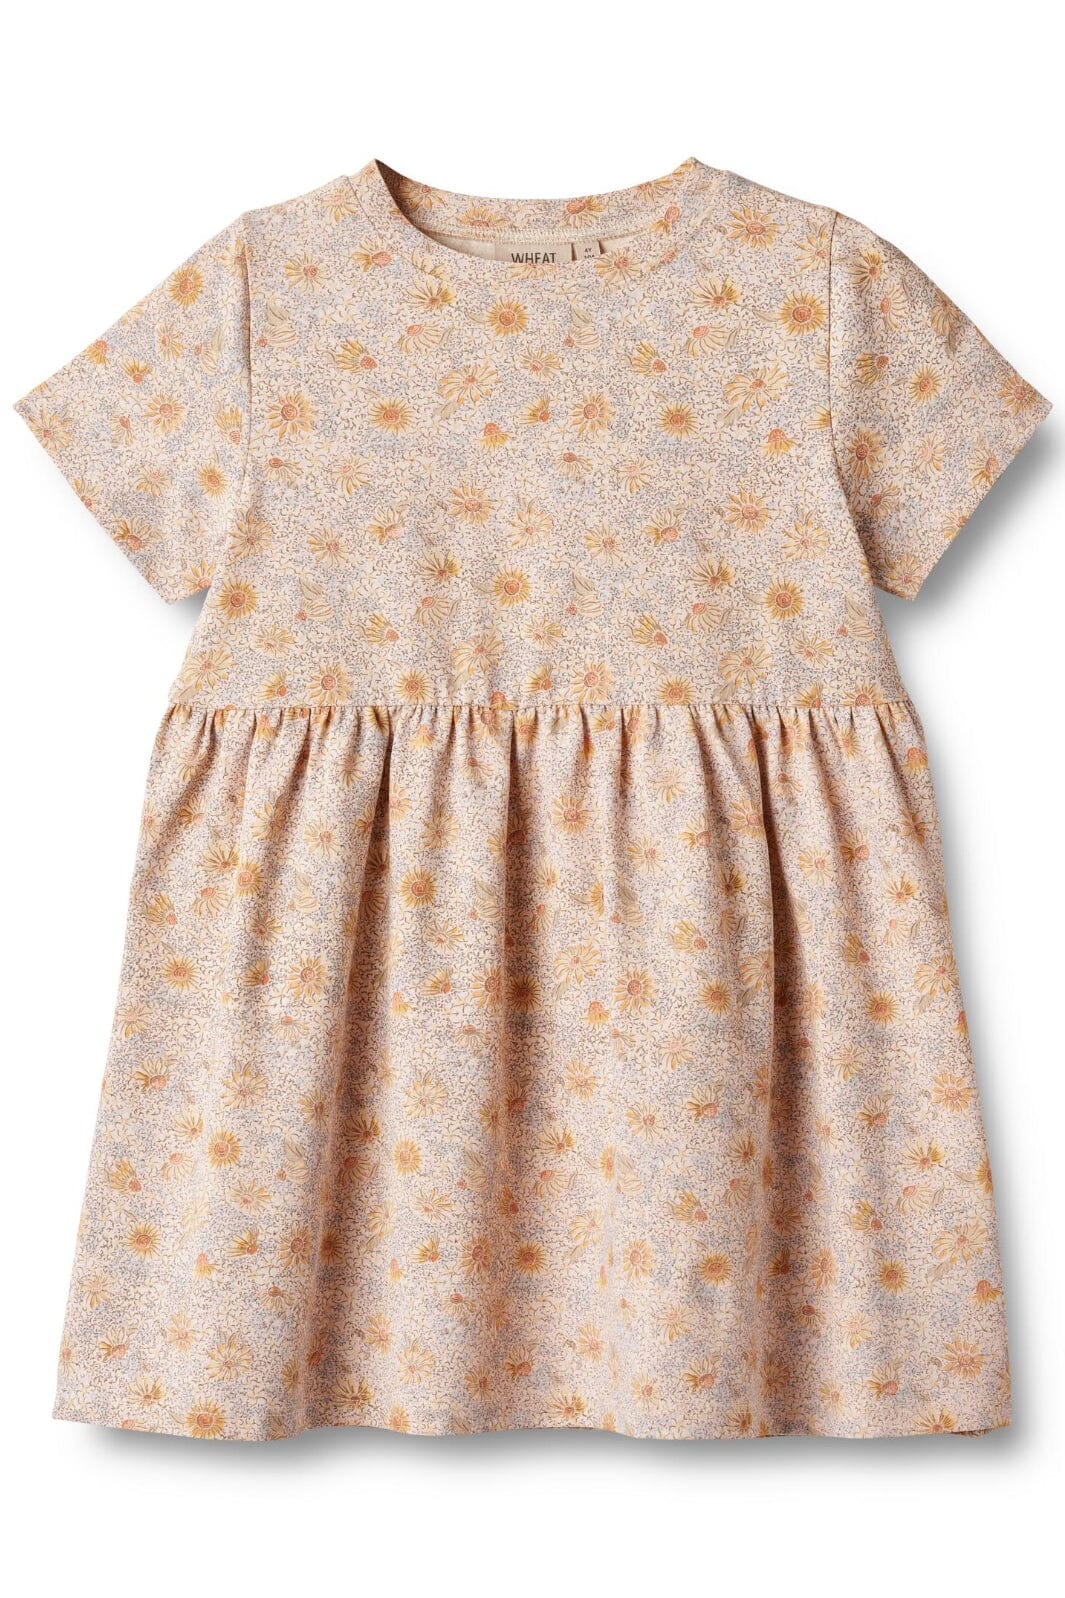 Wheat - Jersey Dress S/s Anna - 9013 Coneflowers Kjoler 